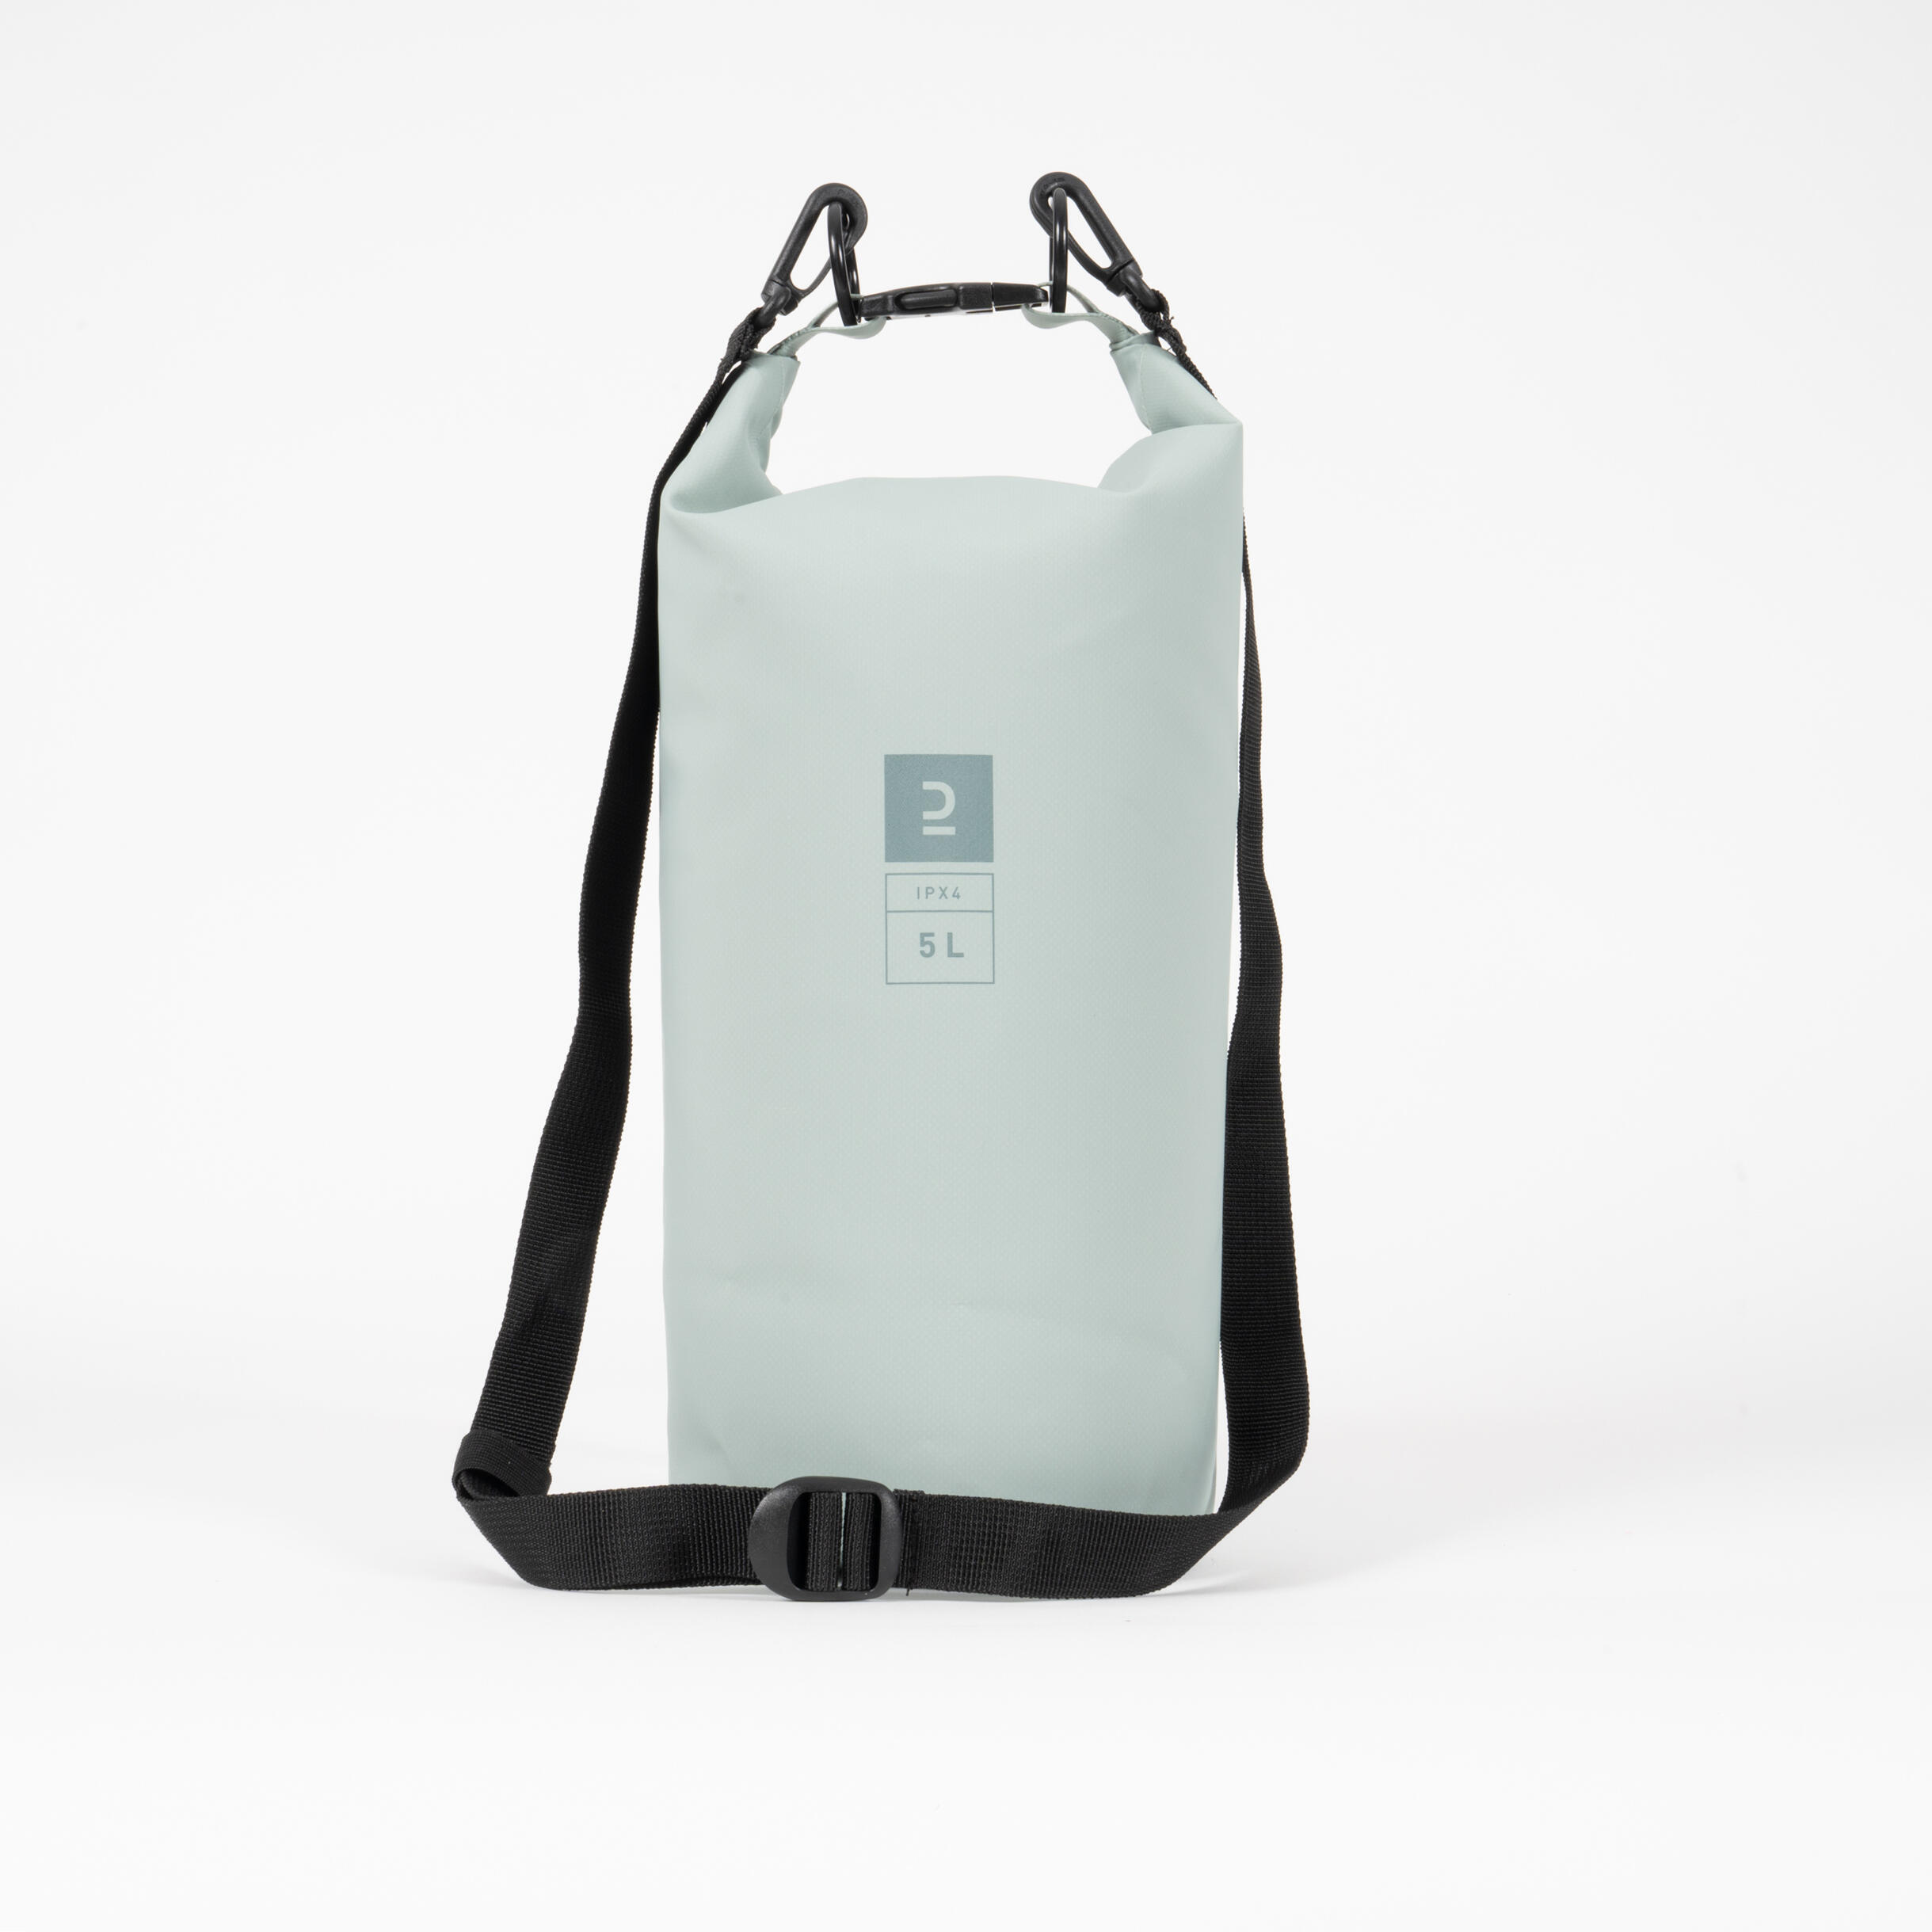 Waterproof Bag IPX4 5L Khaki 5/8